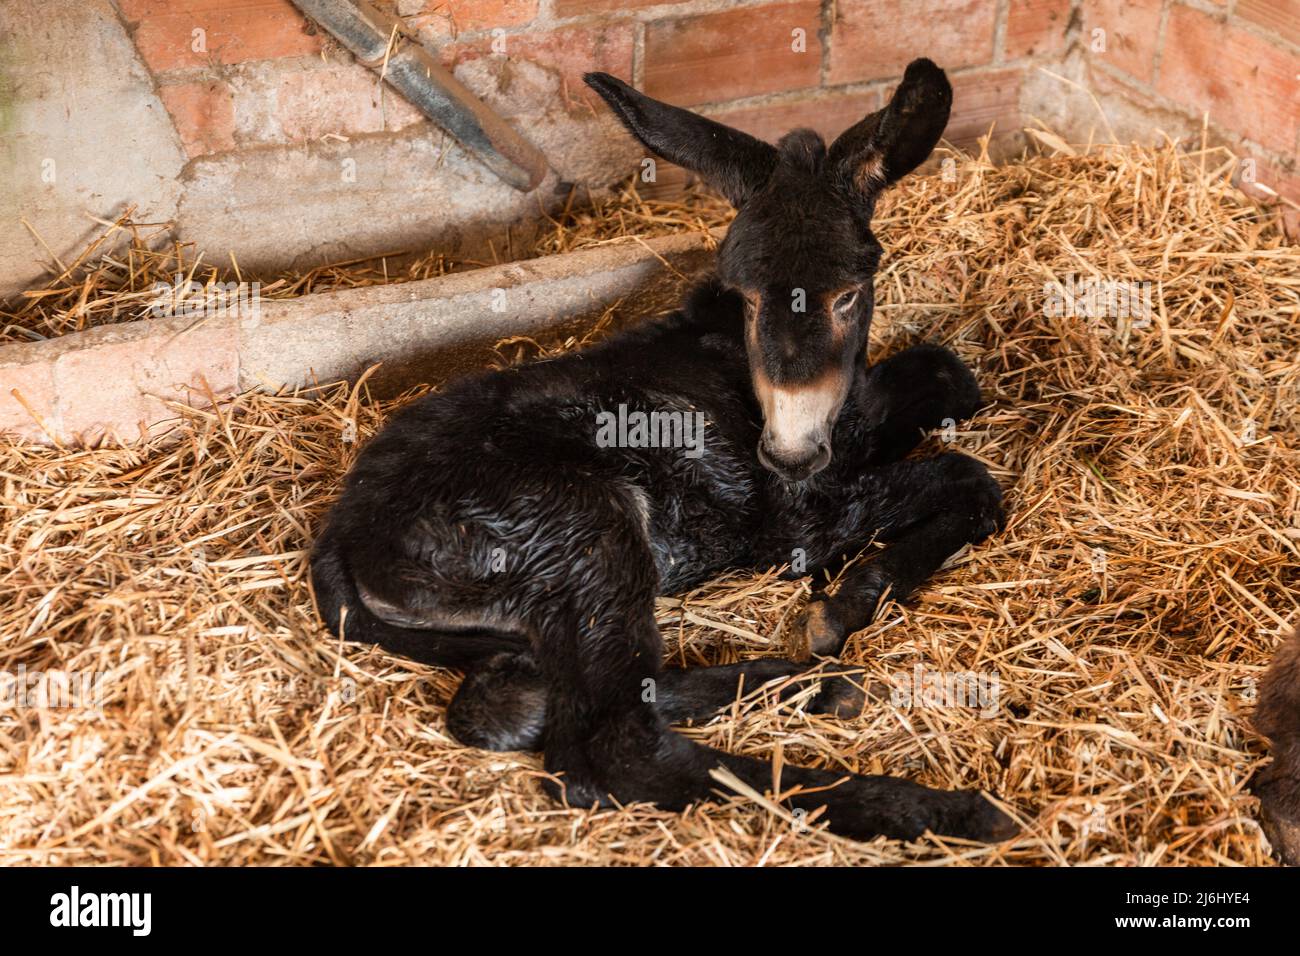 A baby donkey on hay on a farm Stock Photo